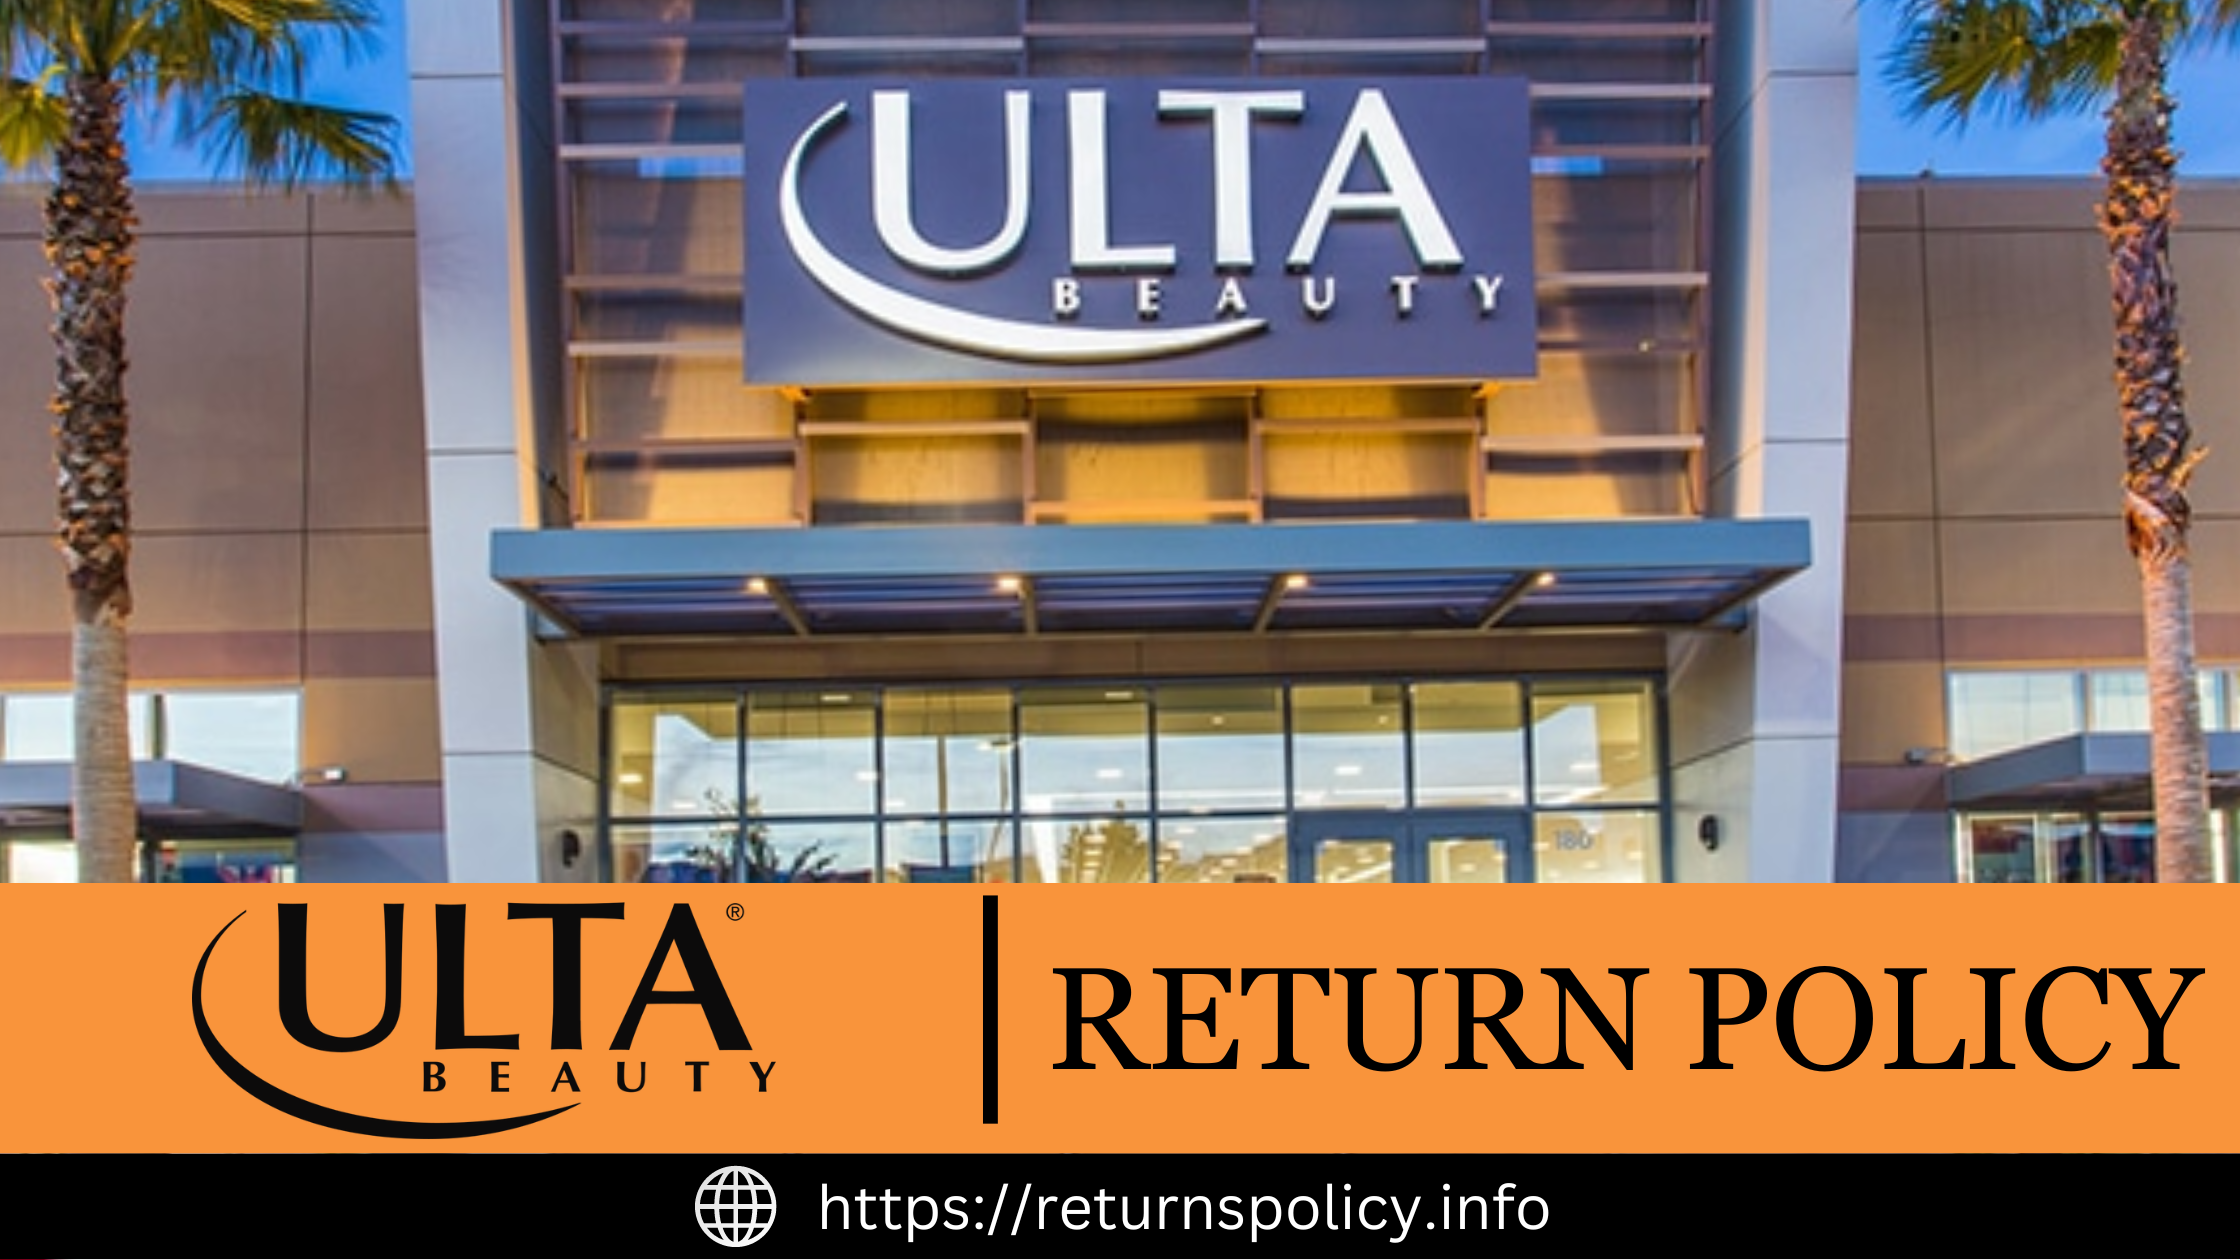 Ulta Return Policy